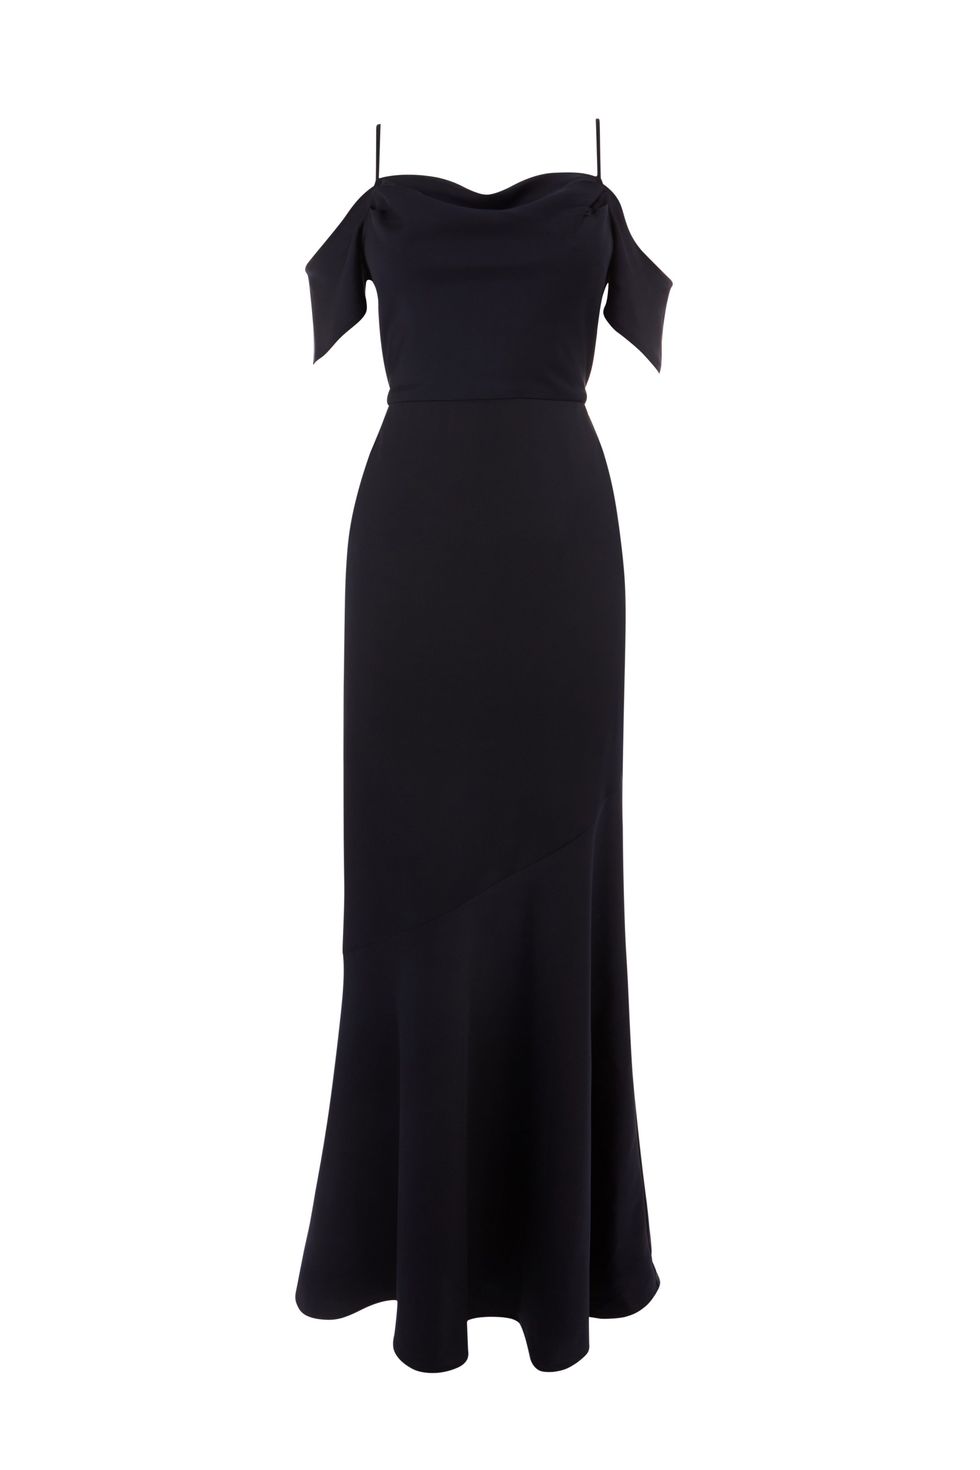 Sleeve, Dress, Standing, One-piece garment, Formal wear, Day dress, Black, Costume design, Cocktail dress, Gown, 